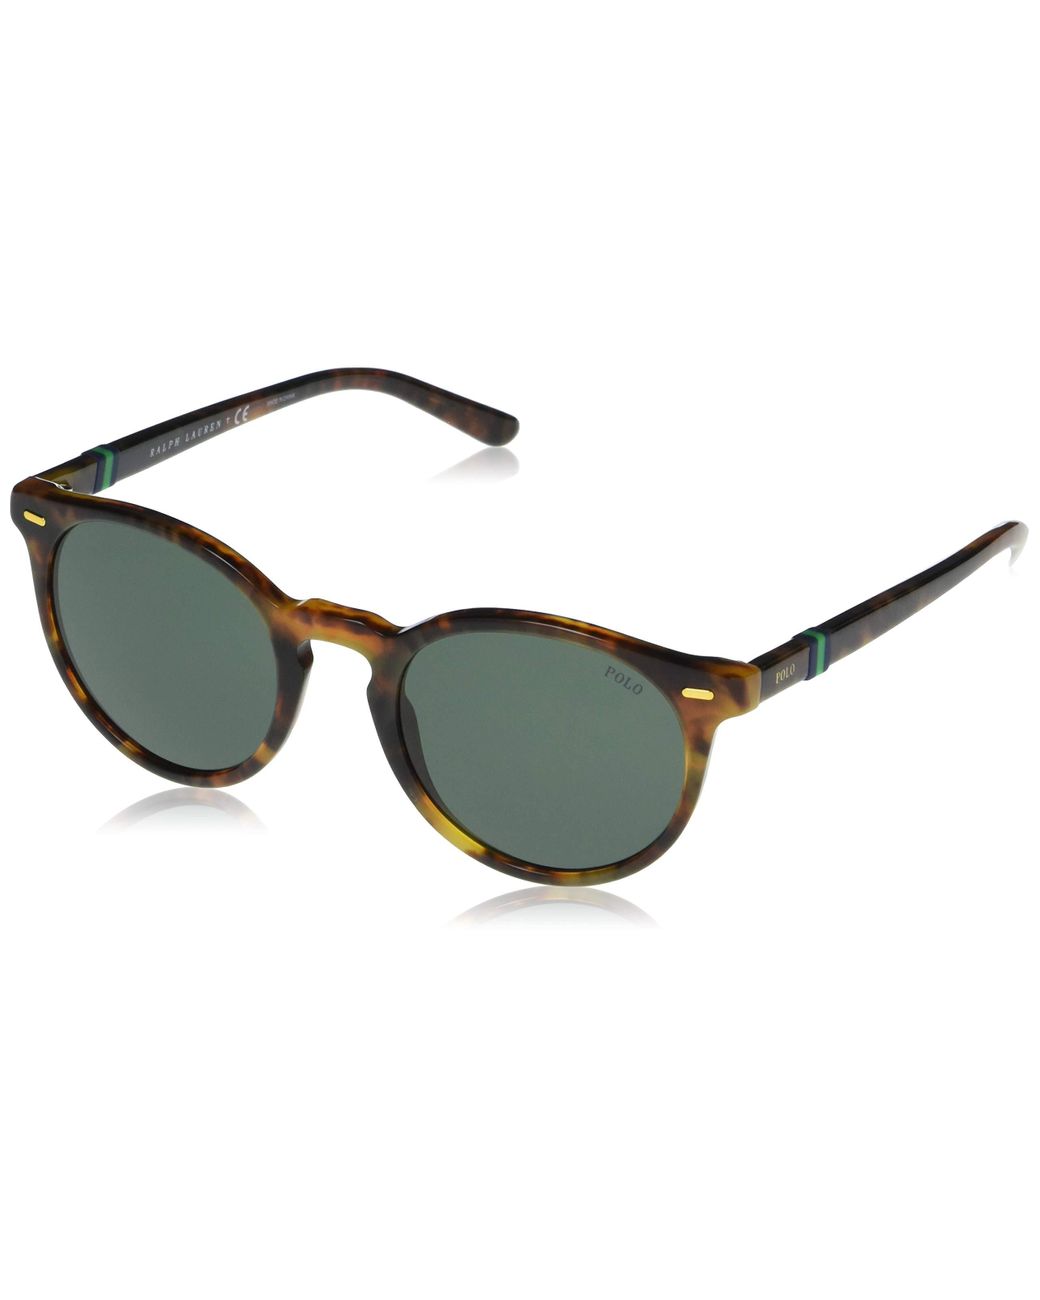 Polo Ralph Lauren Rubber Ph4151 Round Sunglasses In Tortoisegreen Green Save 7 Lyst 